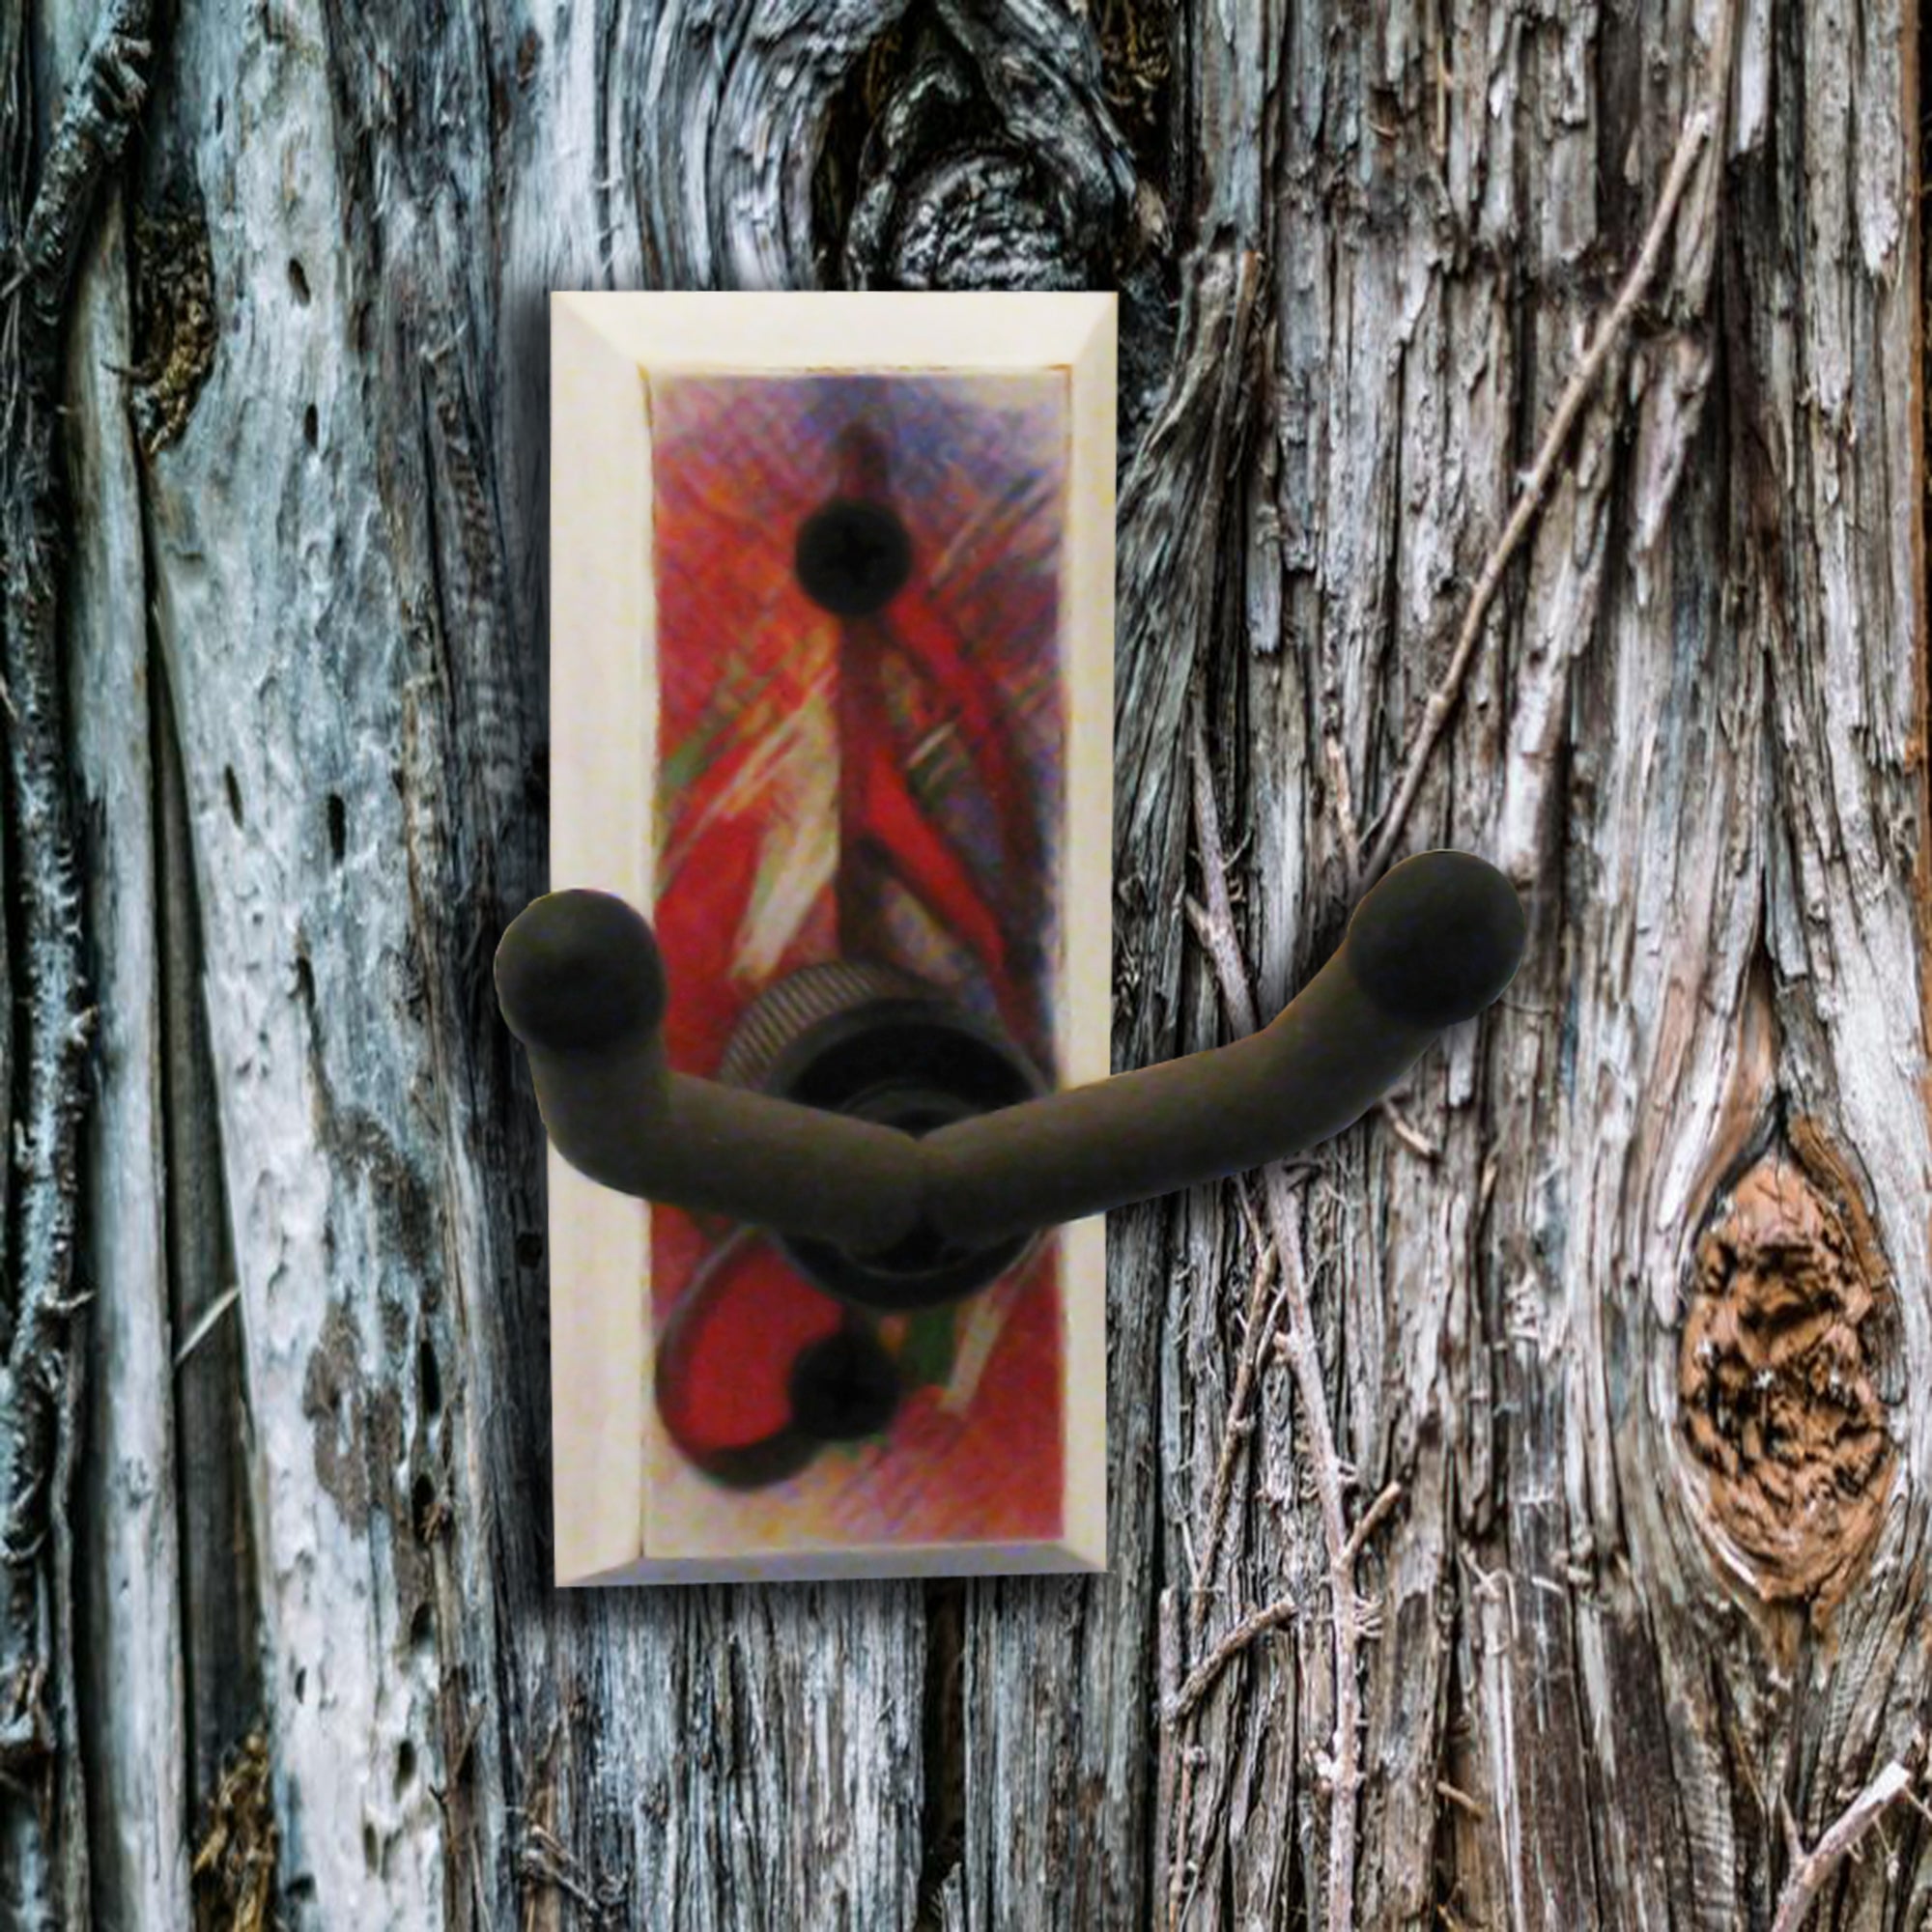 Banjo Wall Hanger - 16th Note in Red - Distressed Reclaimed Oak